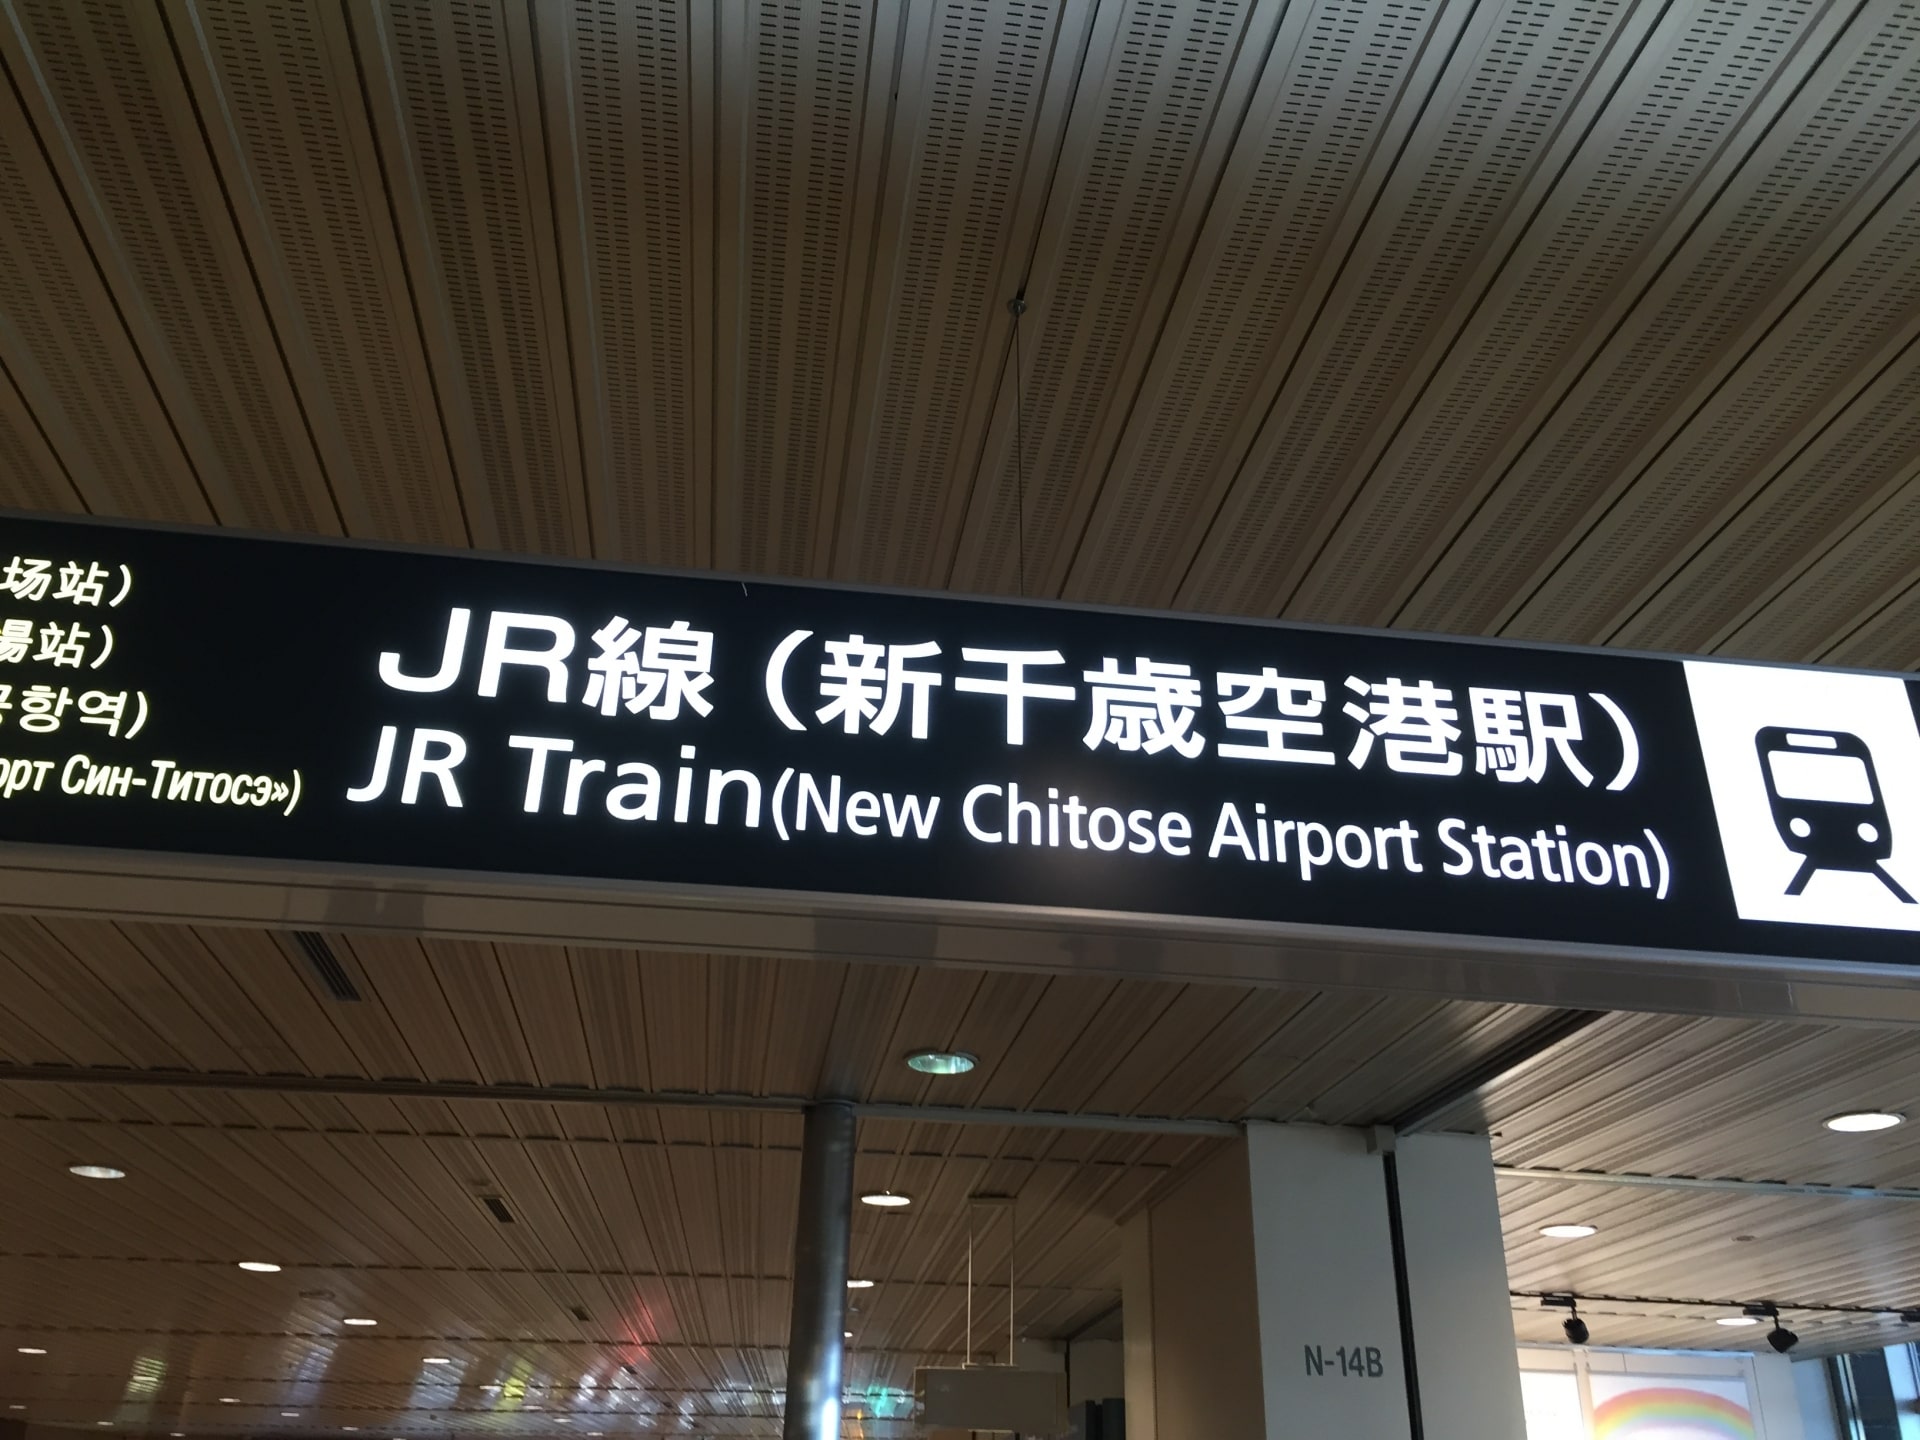 New Chitose train